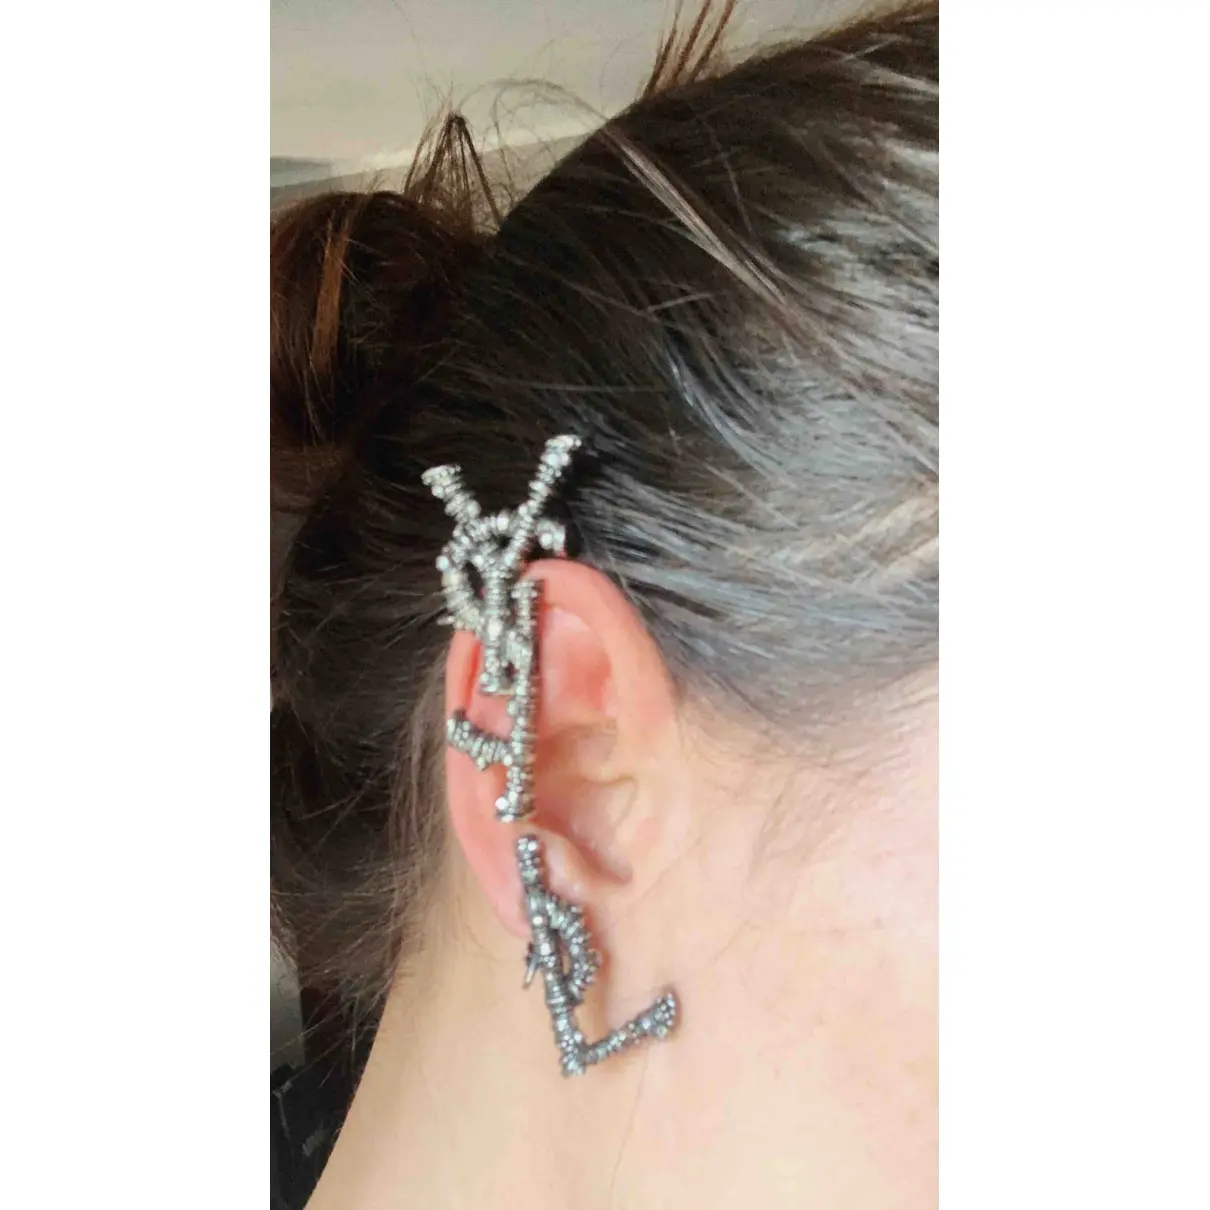 Monogramme earrings Saint Laurent